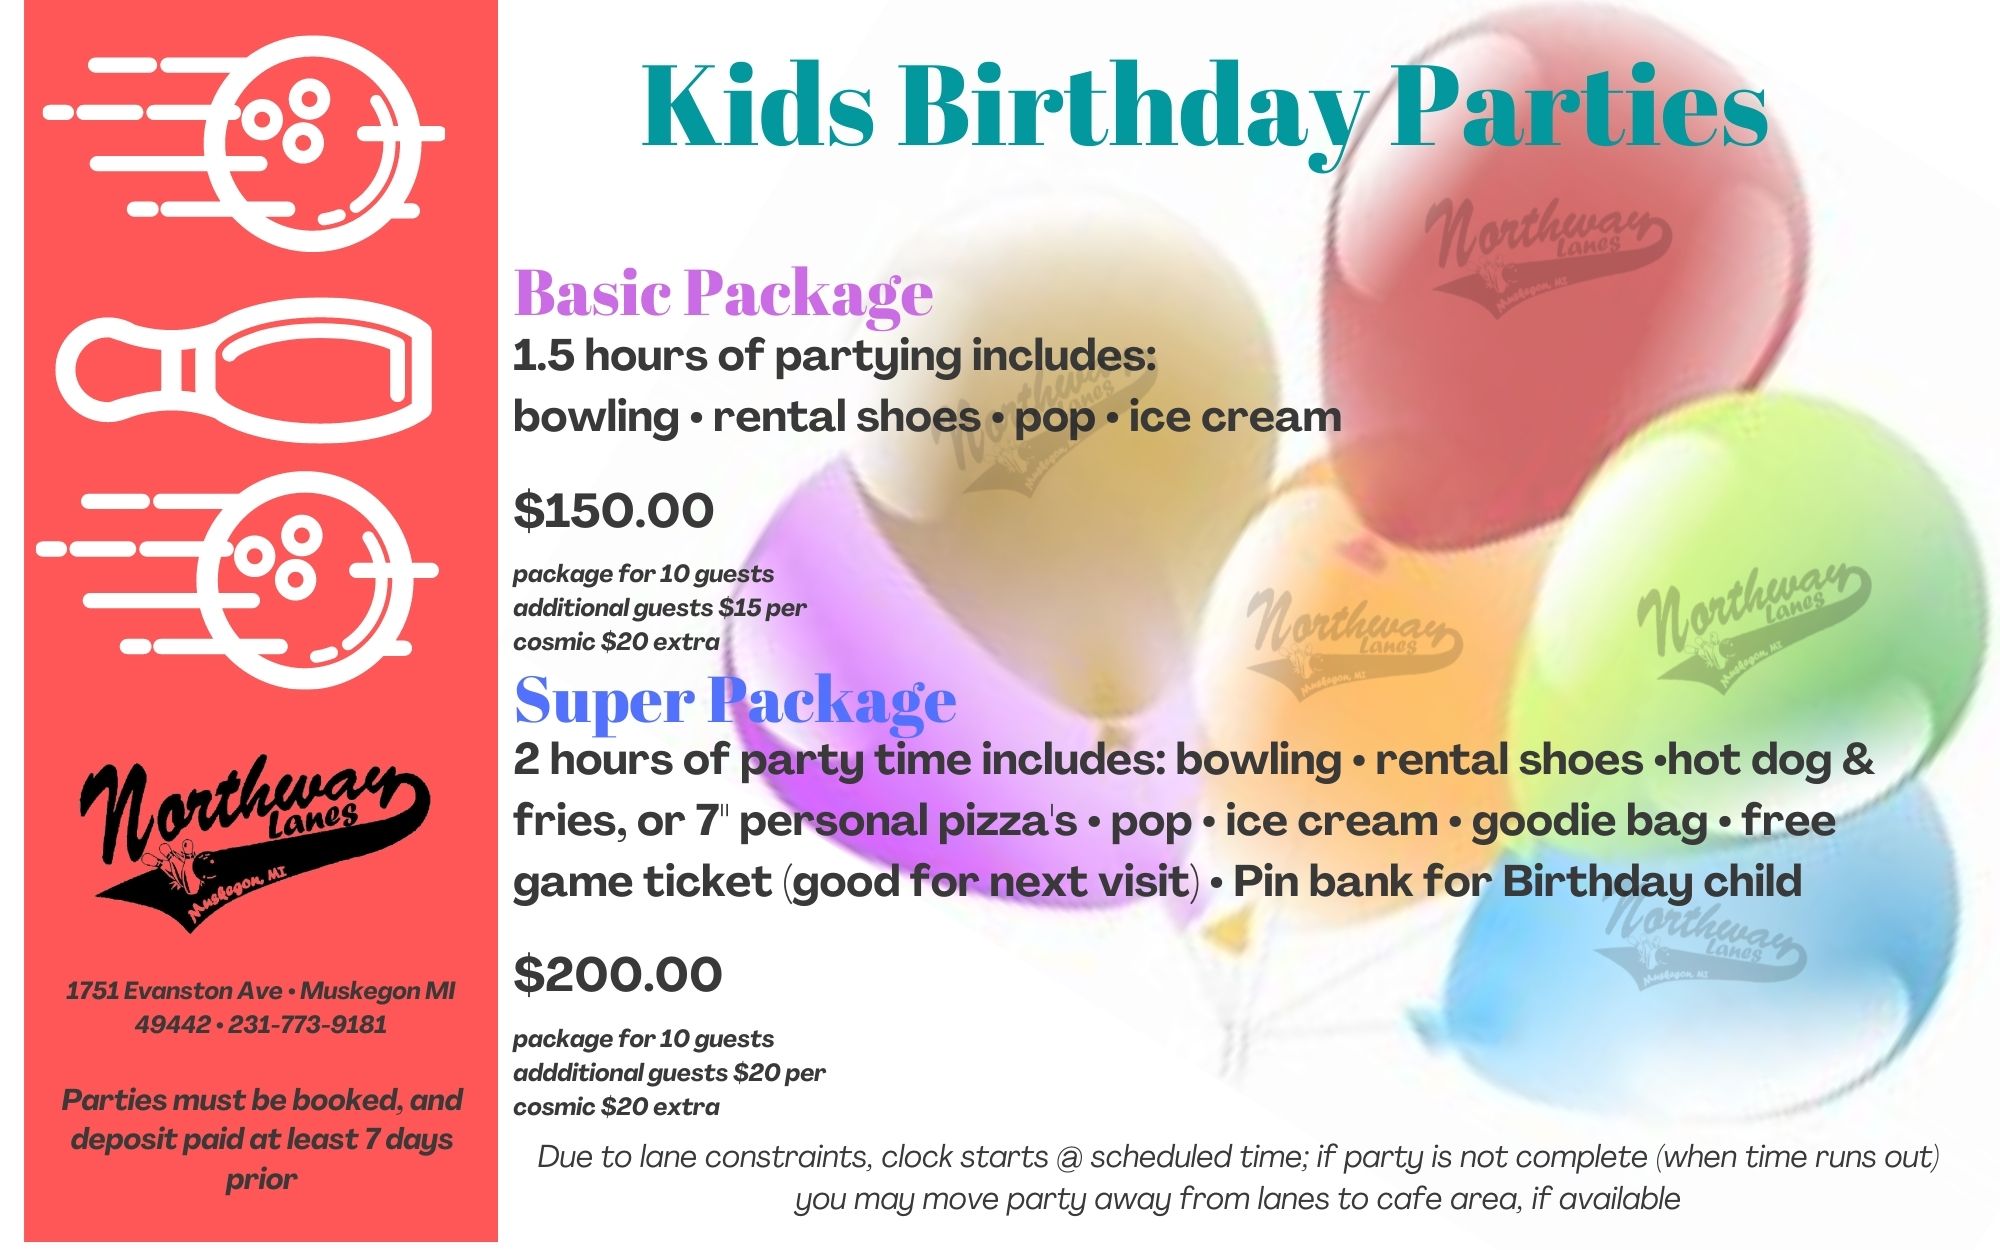 Fun Kids Birthday Parties made easy